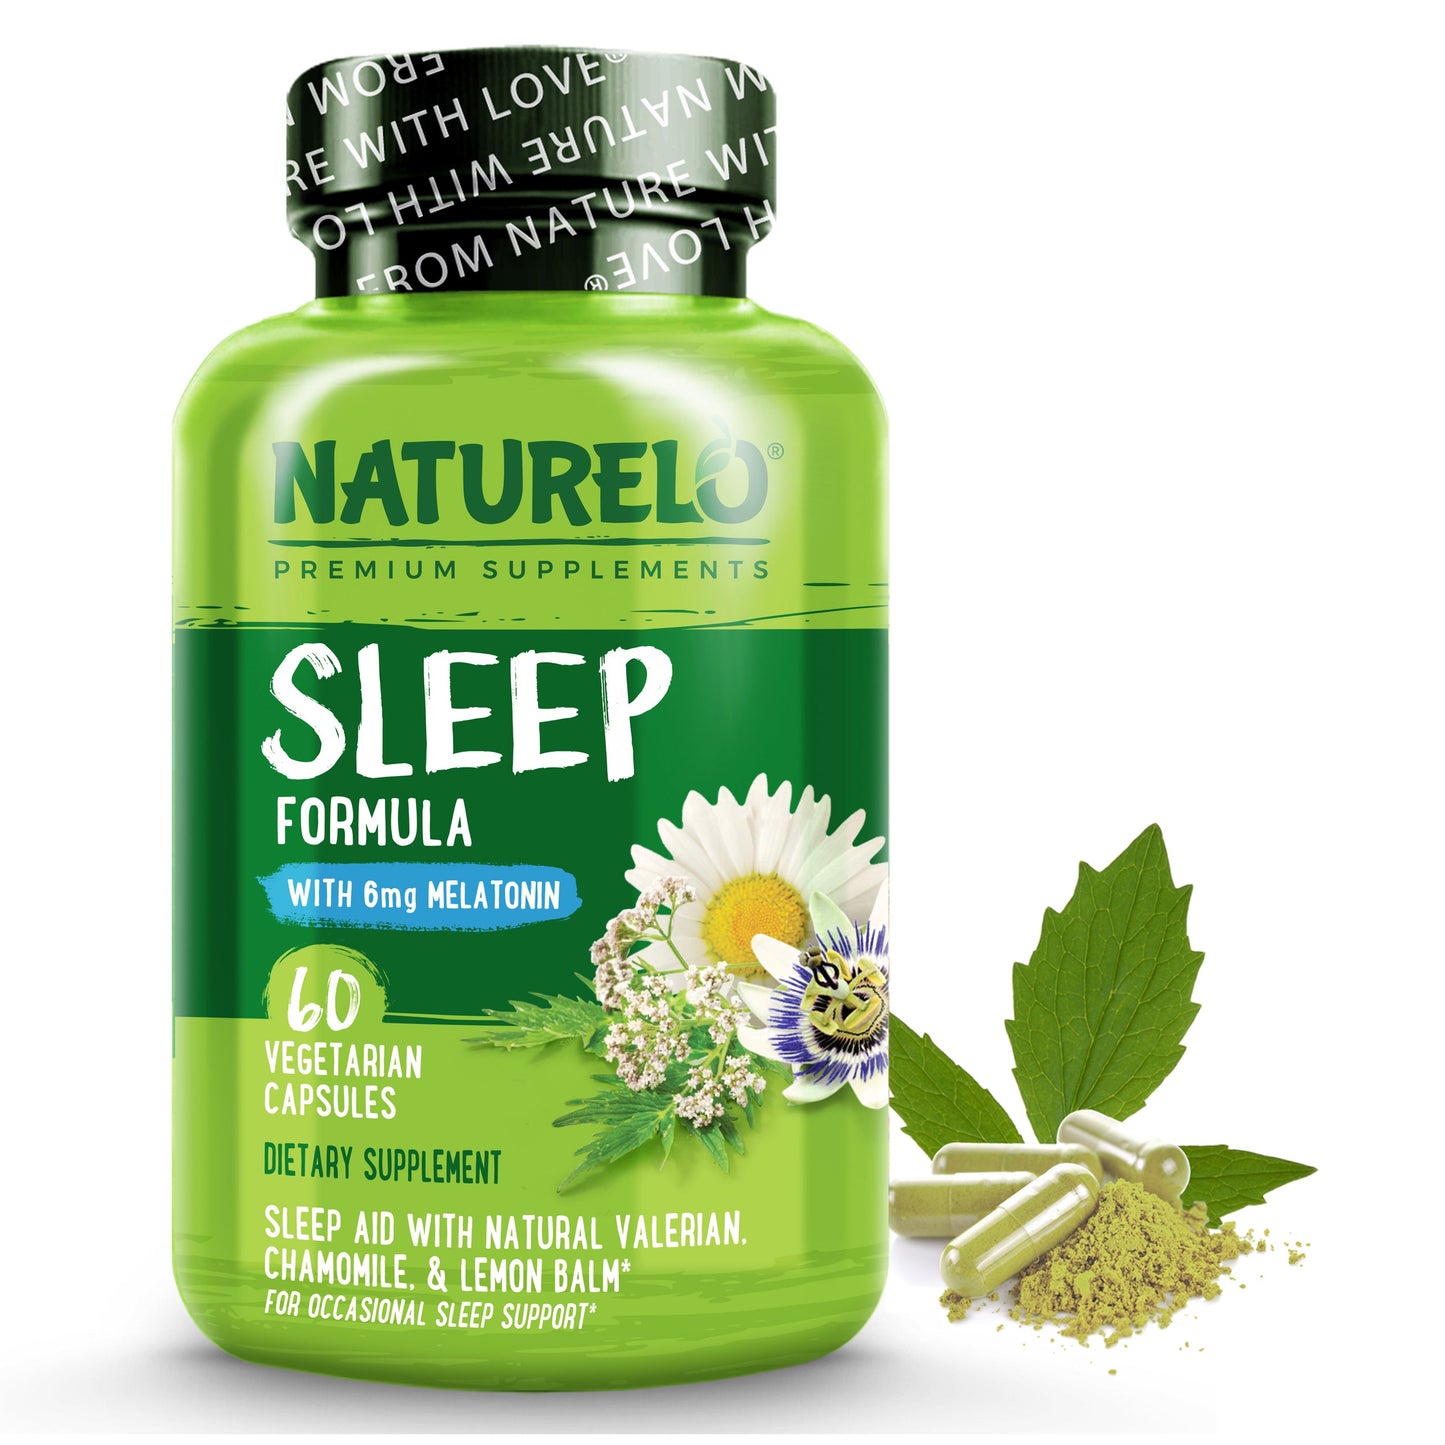 Sleep Support Formula With Chamomile, Valerian, and Melatonin